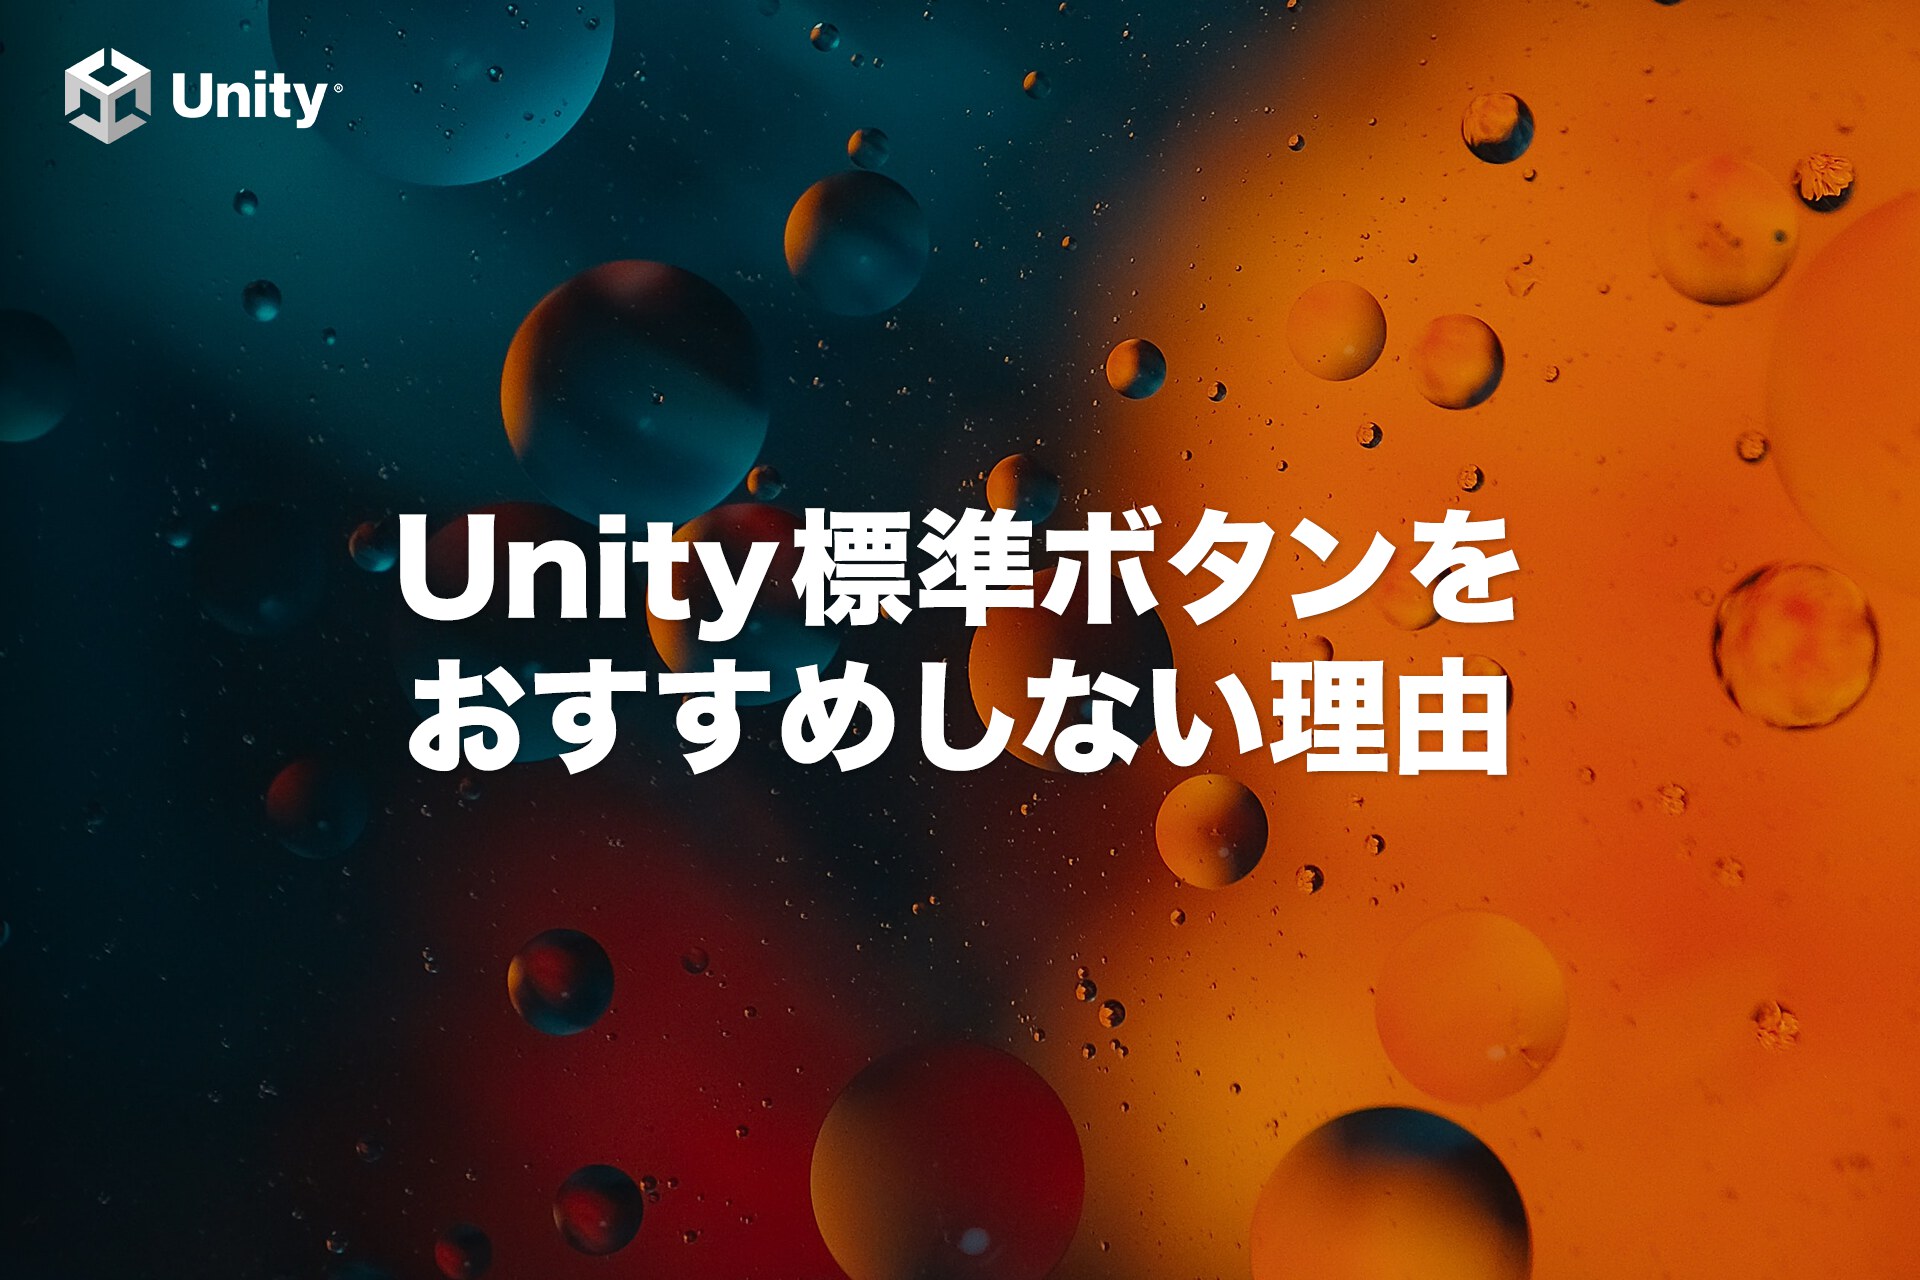 【Unity UI】Unity標準ボタンをおすすめしない5つの理由